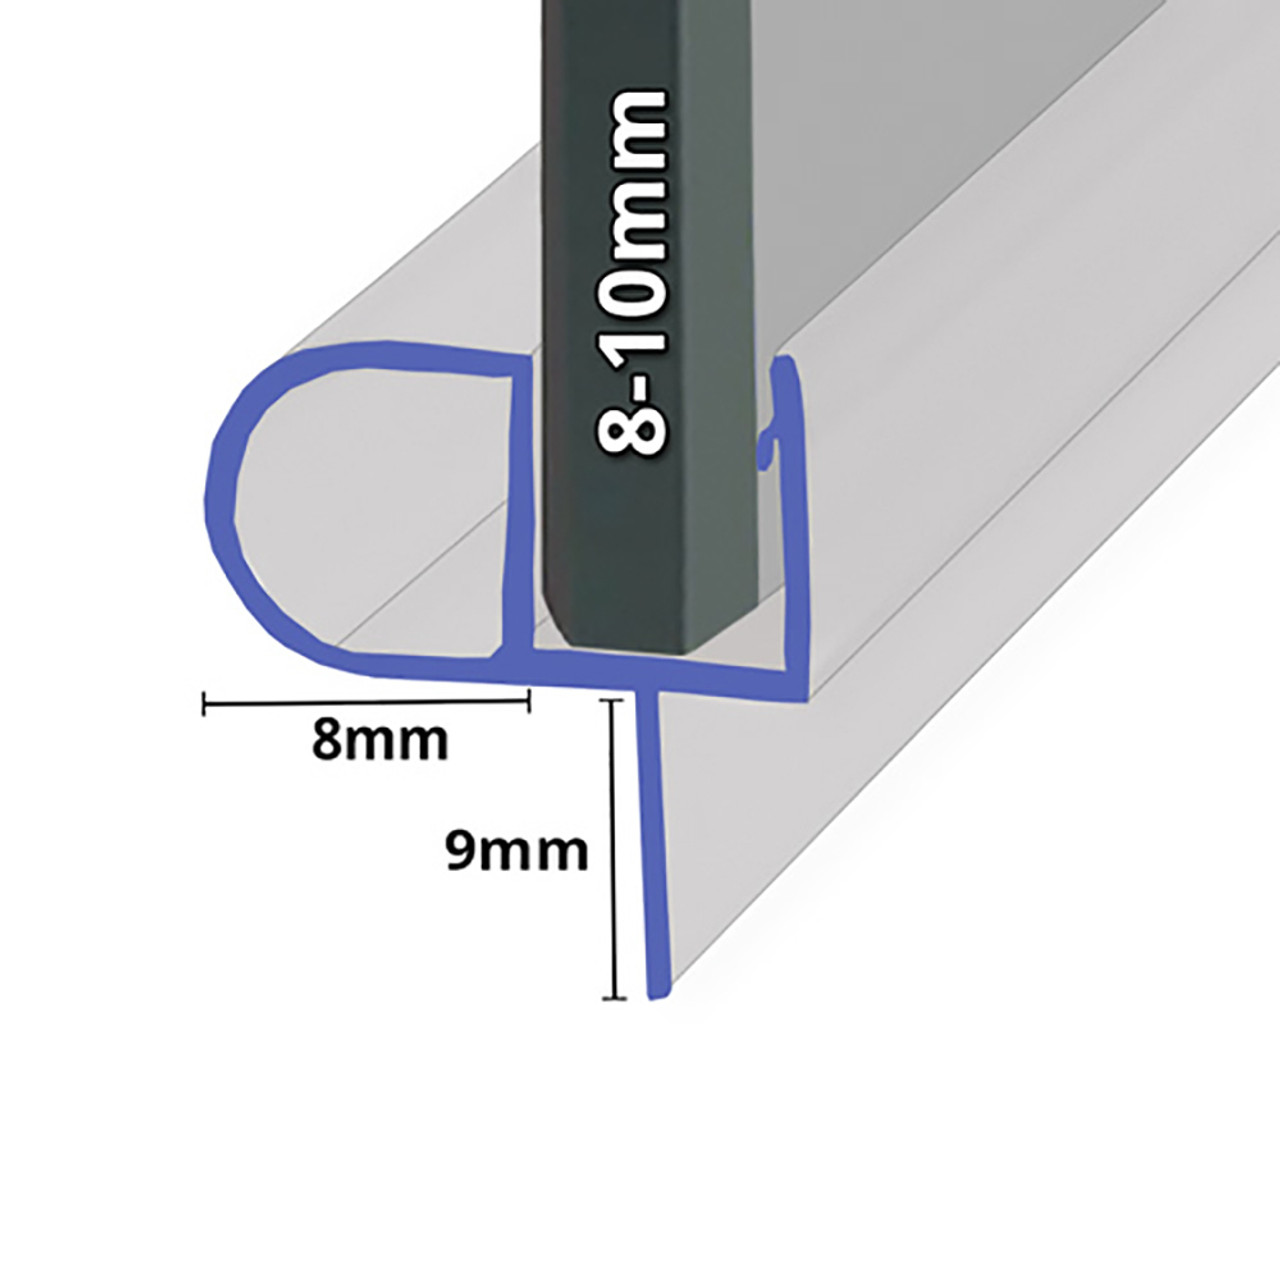 Seal 8 - 900 mm Glass Shower Door Rubber Seal Strip Gap 8 mm